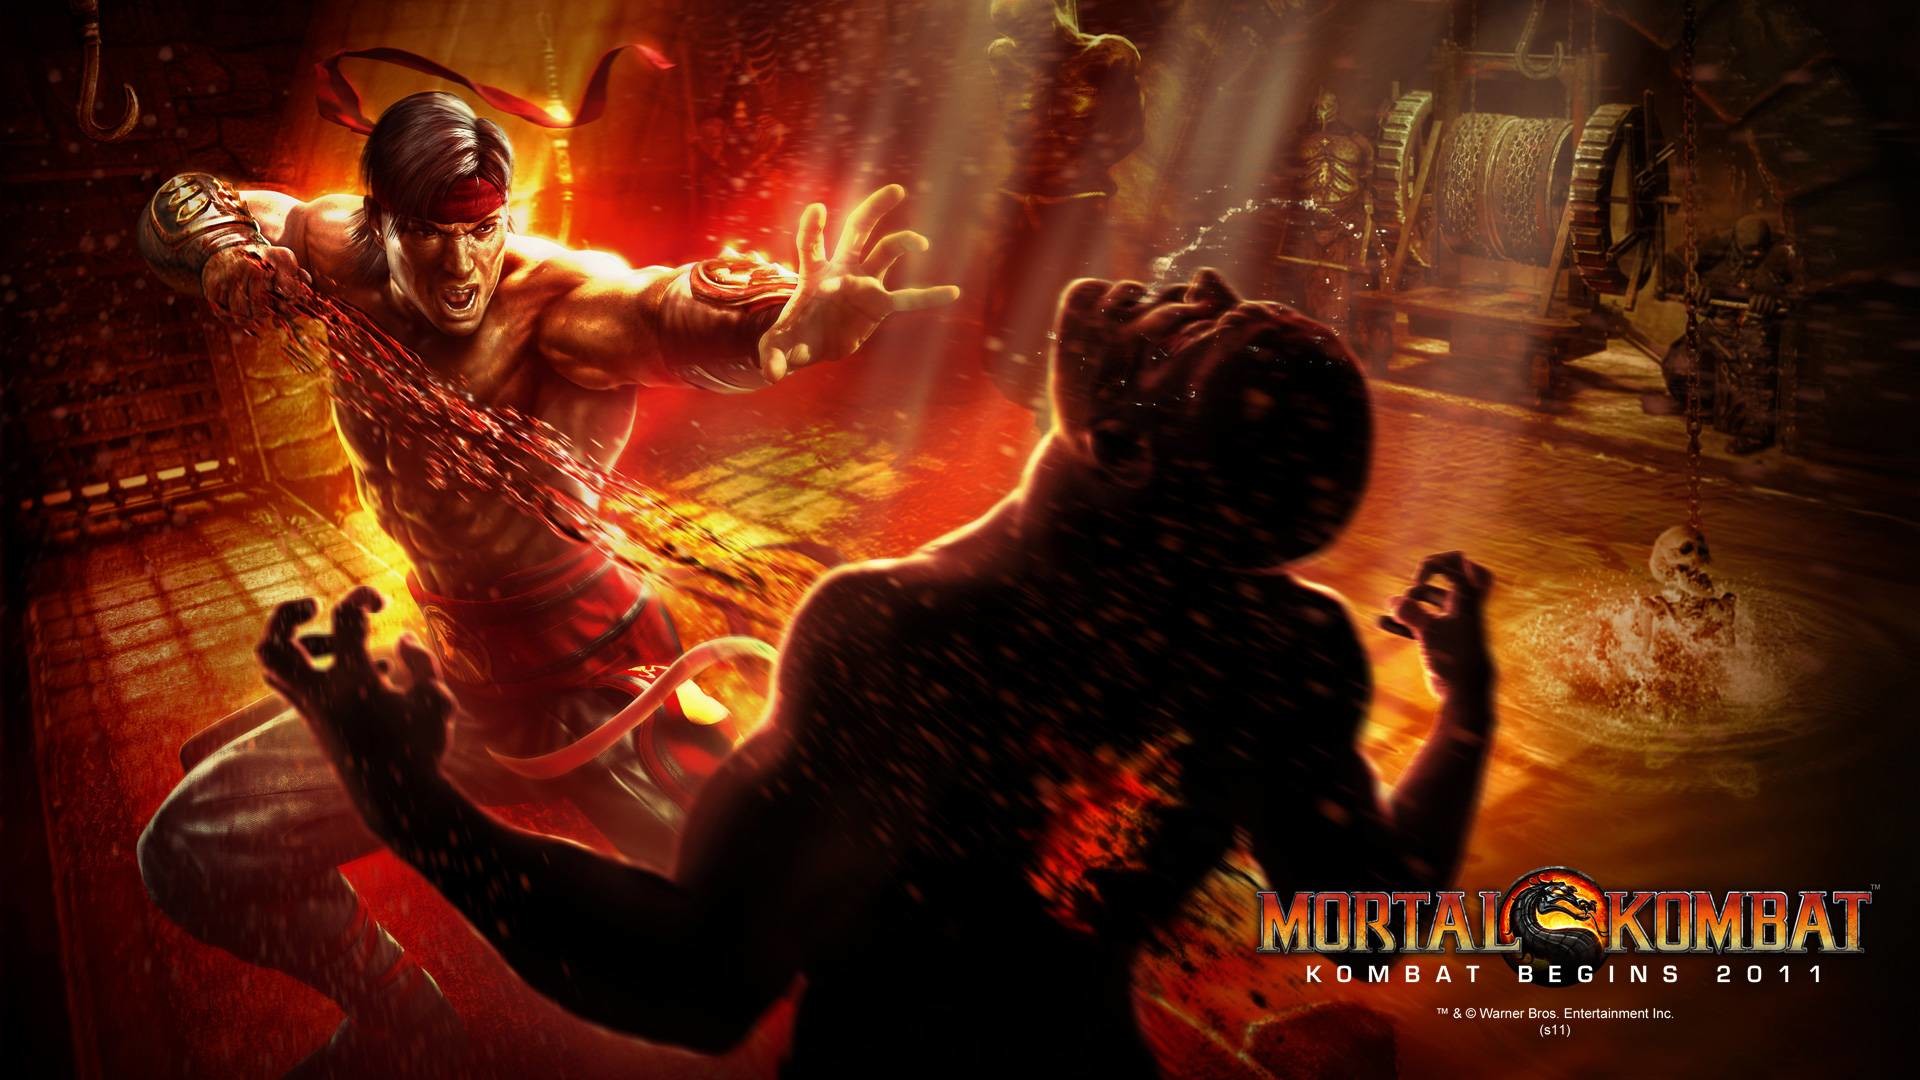 1920x1080 Mortal Kombat Wallpapers in full 1080P HD Â« GamingBolt.com: Video .